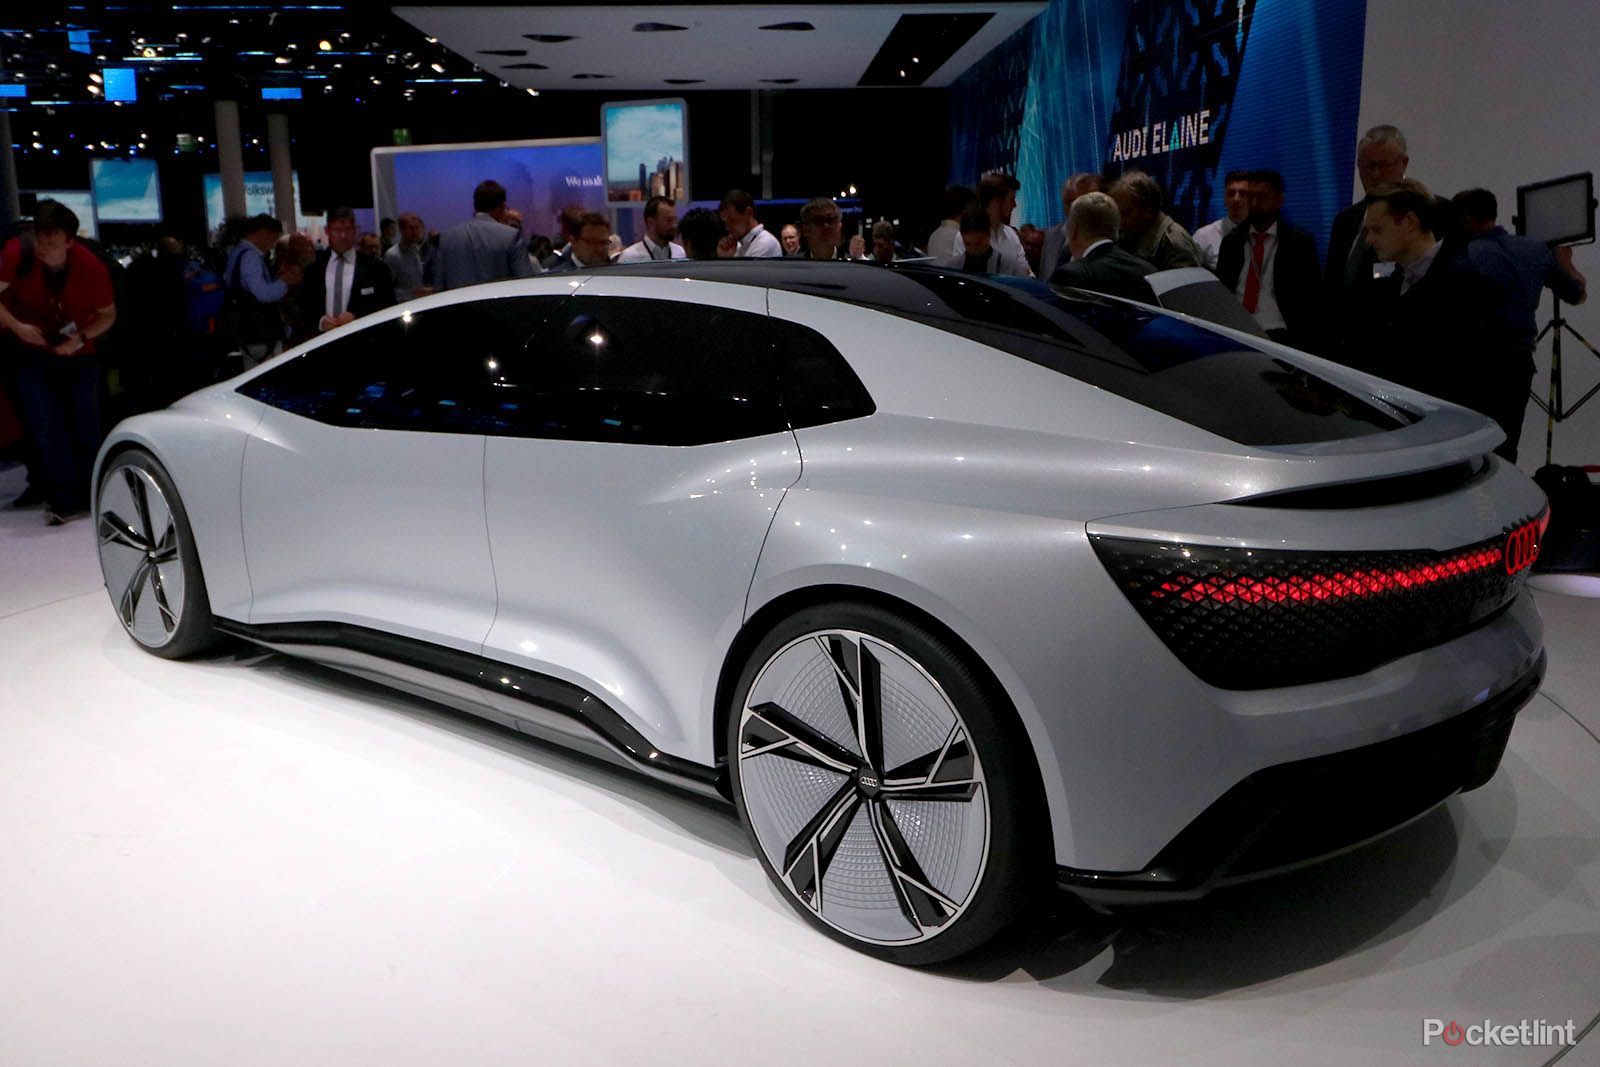 Audi Aicon concept in pictures image 3